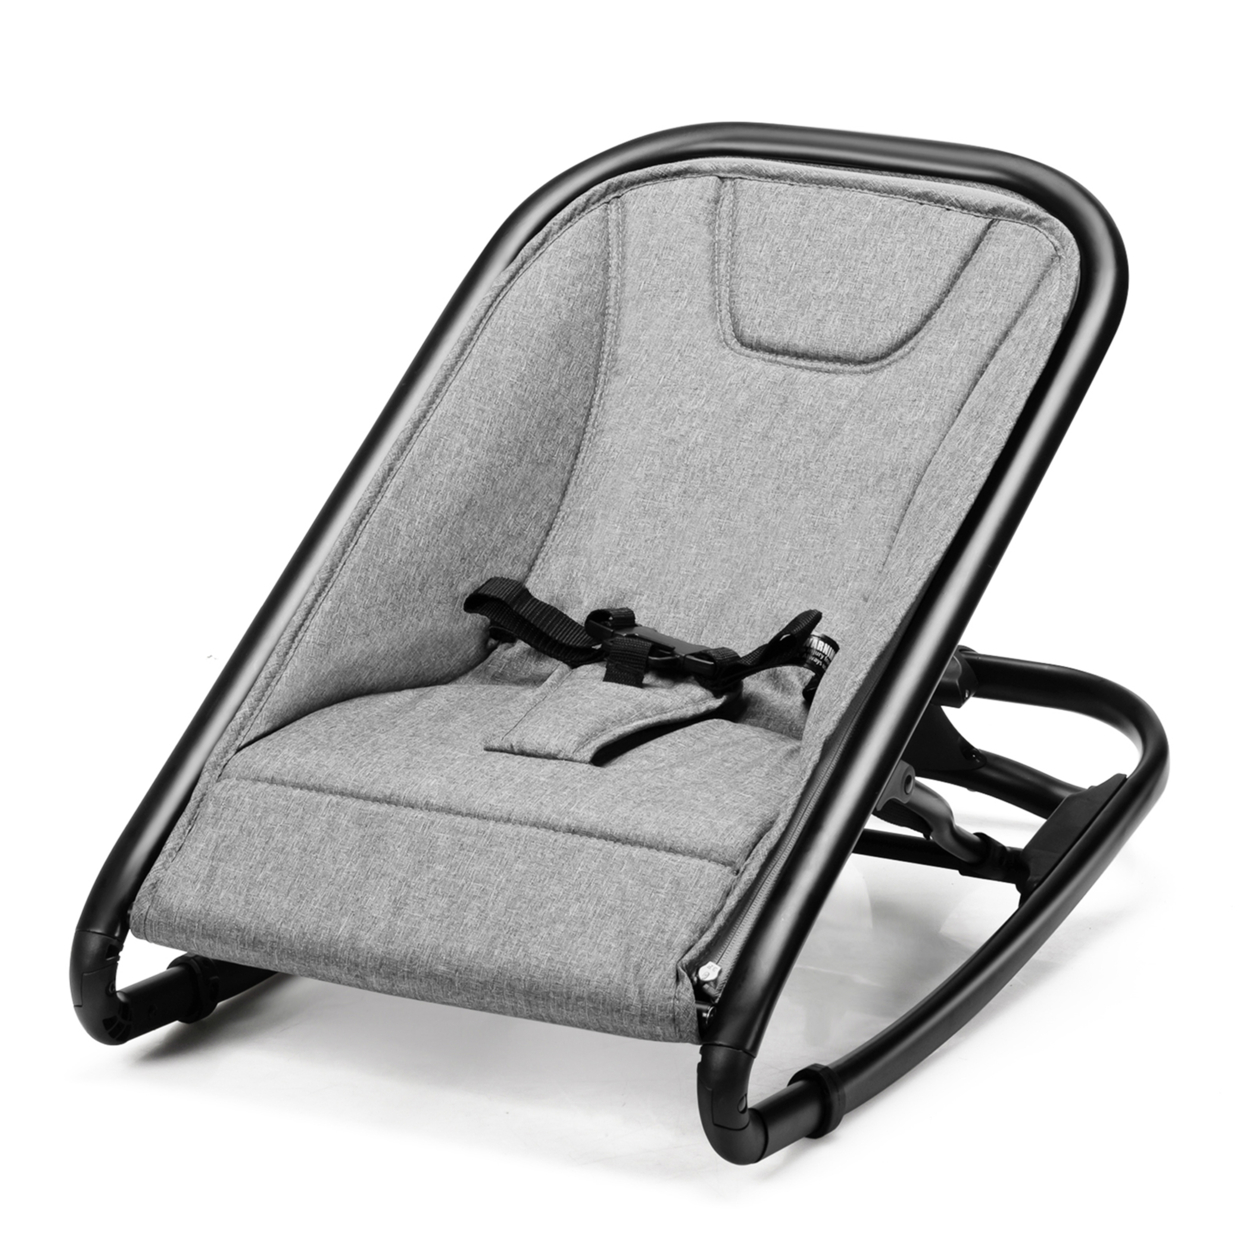 2 In 1 Folding Baby Rocker Bouncer Seat W/ 2 Adjustable Recline Positions - Light Grey